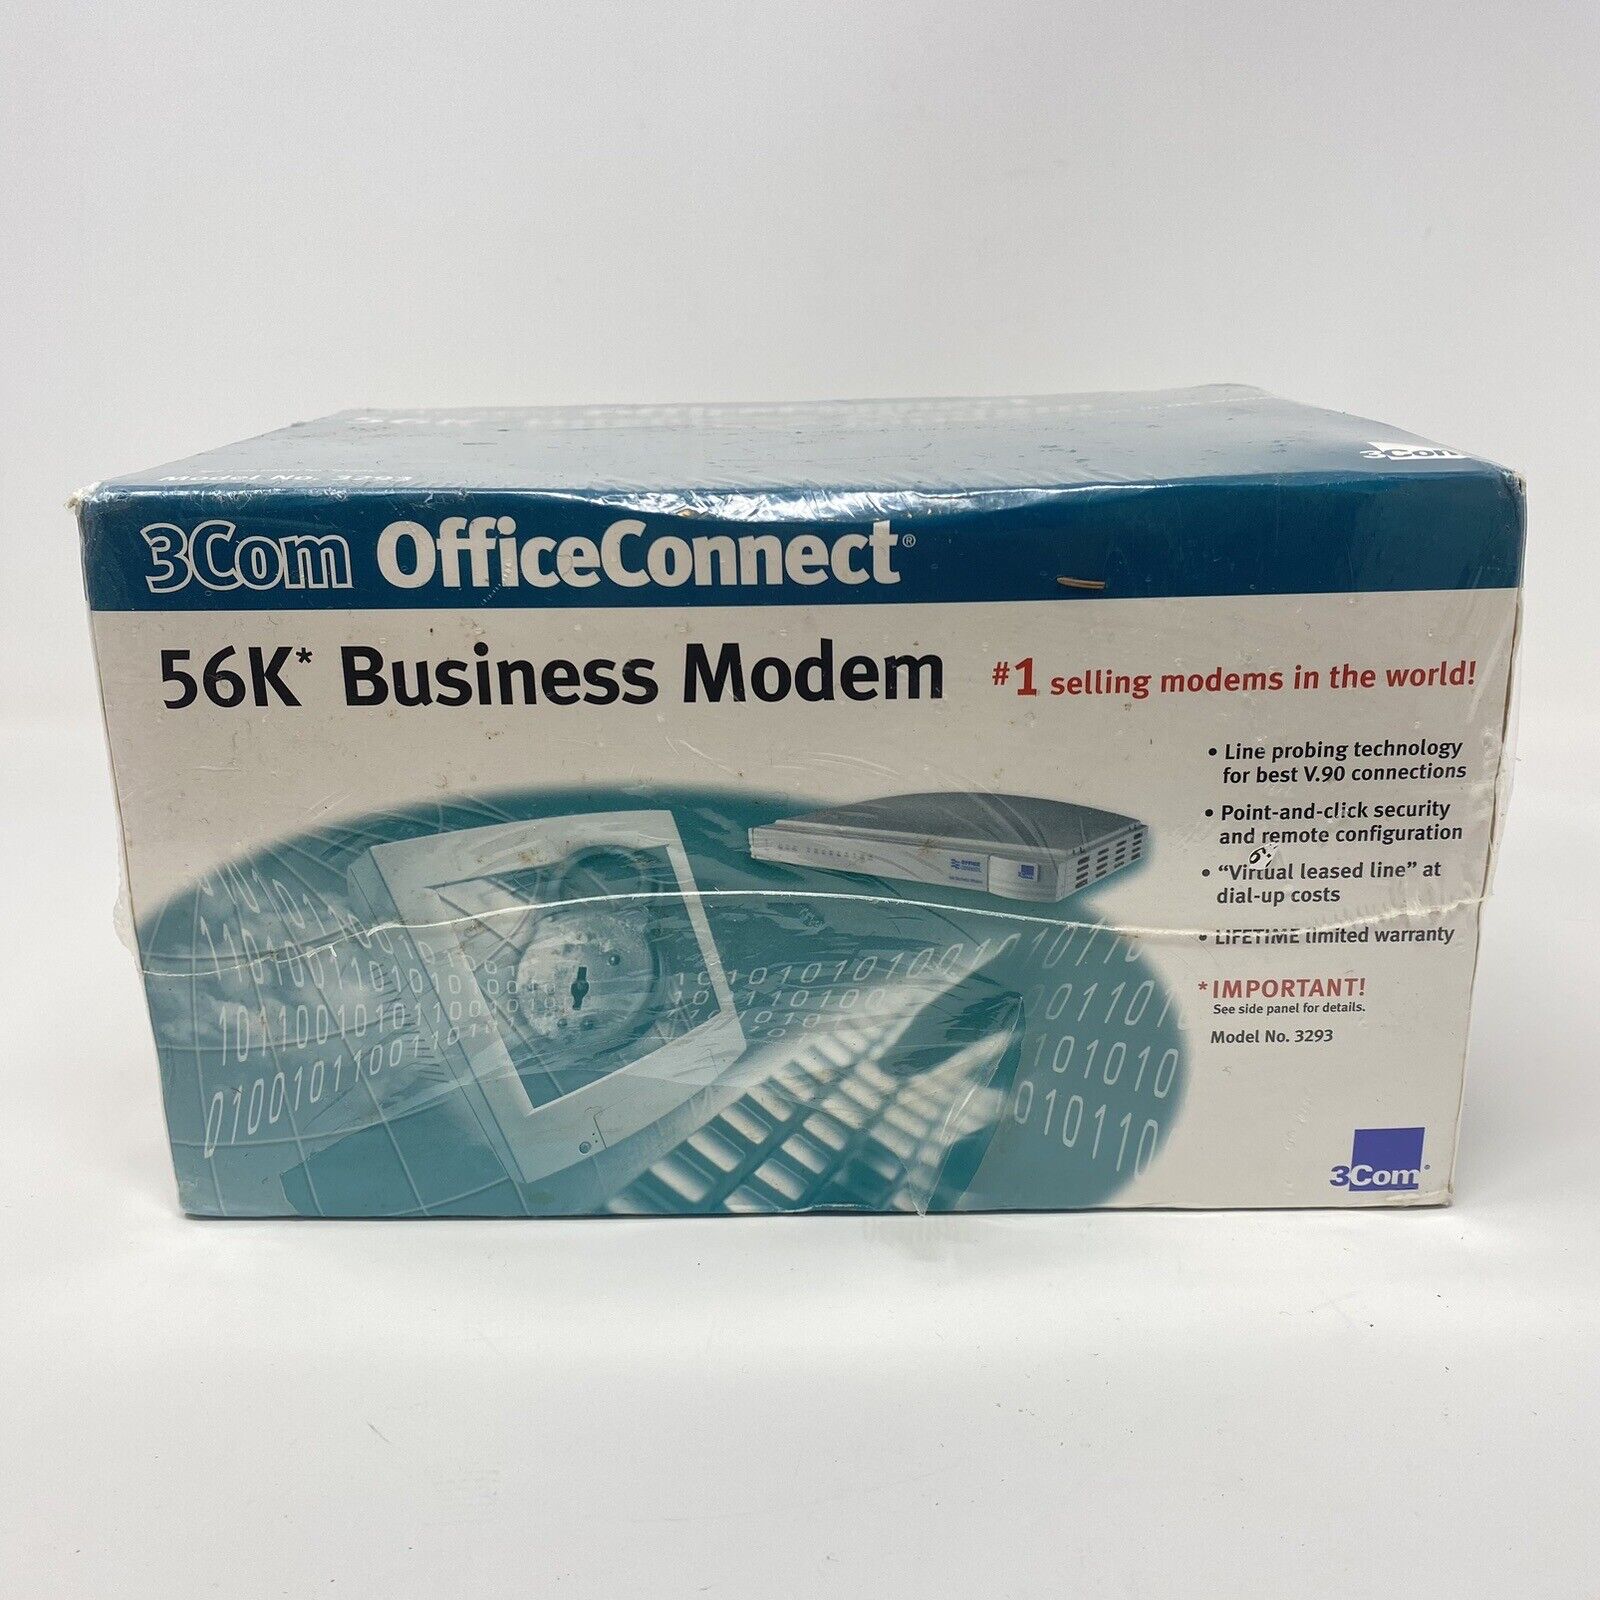 3Com OfficeConnect 56k Business Modem 3293 - READ